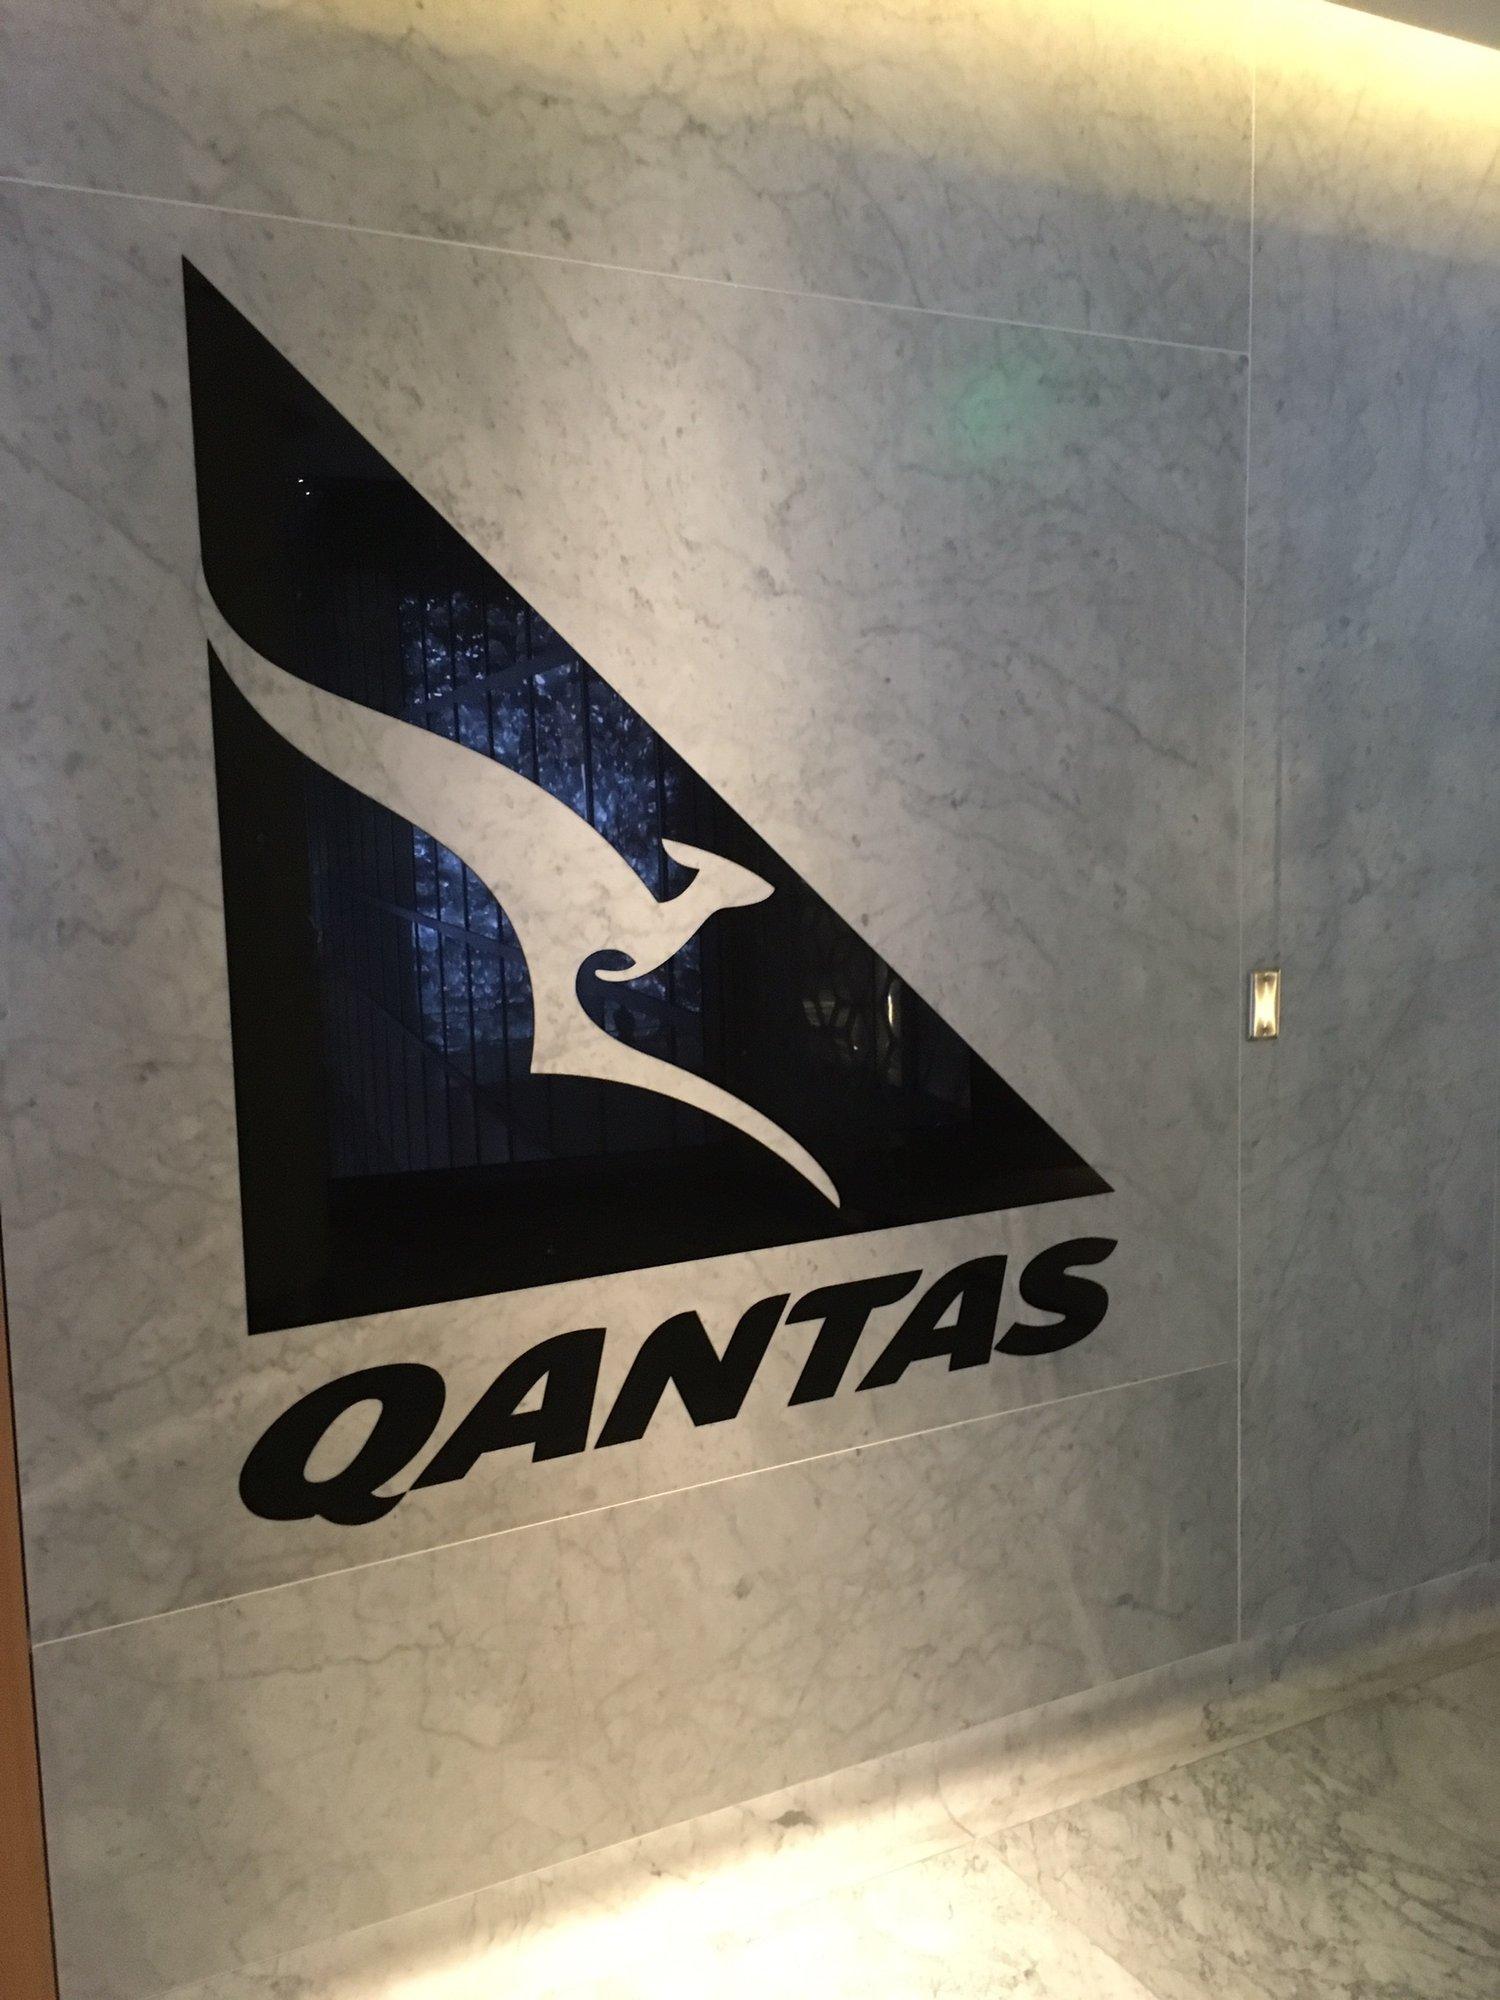 Qantas Airways International First Lounge image 46 of 77